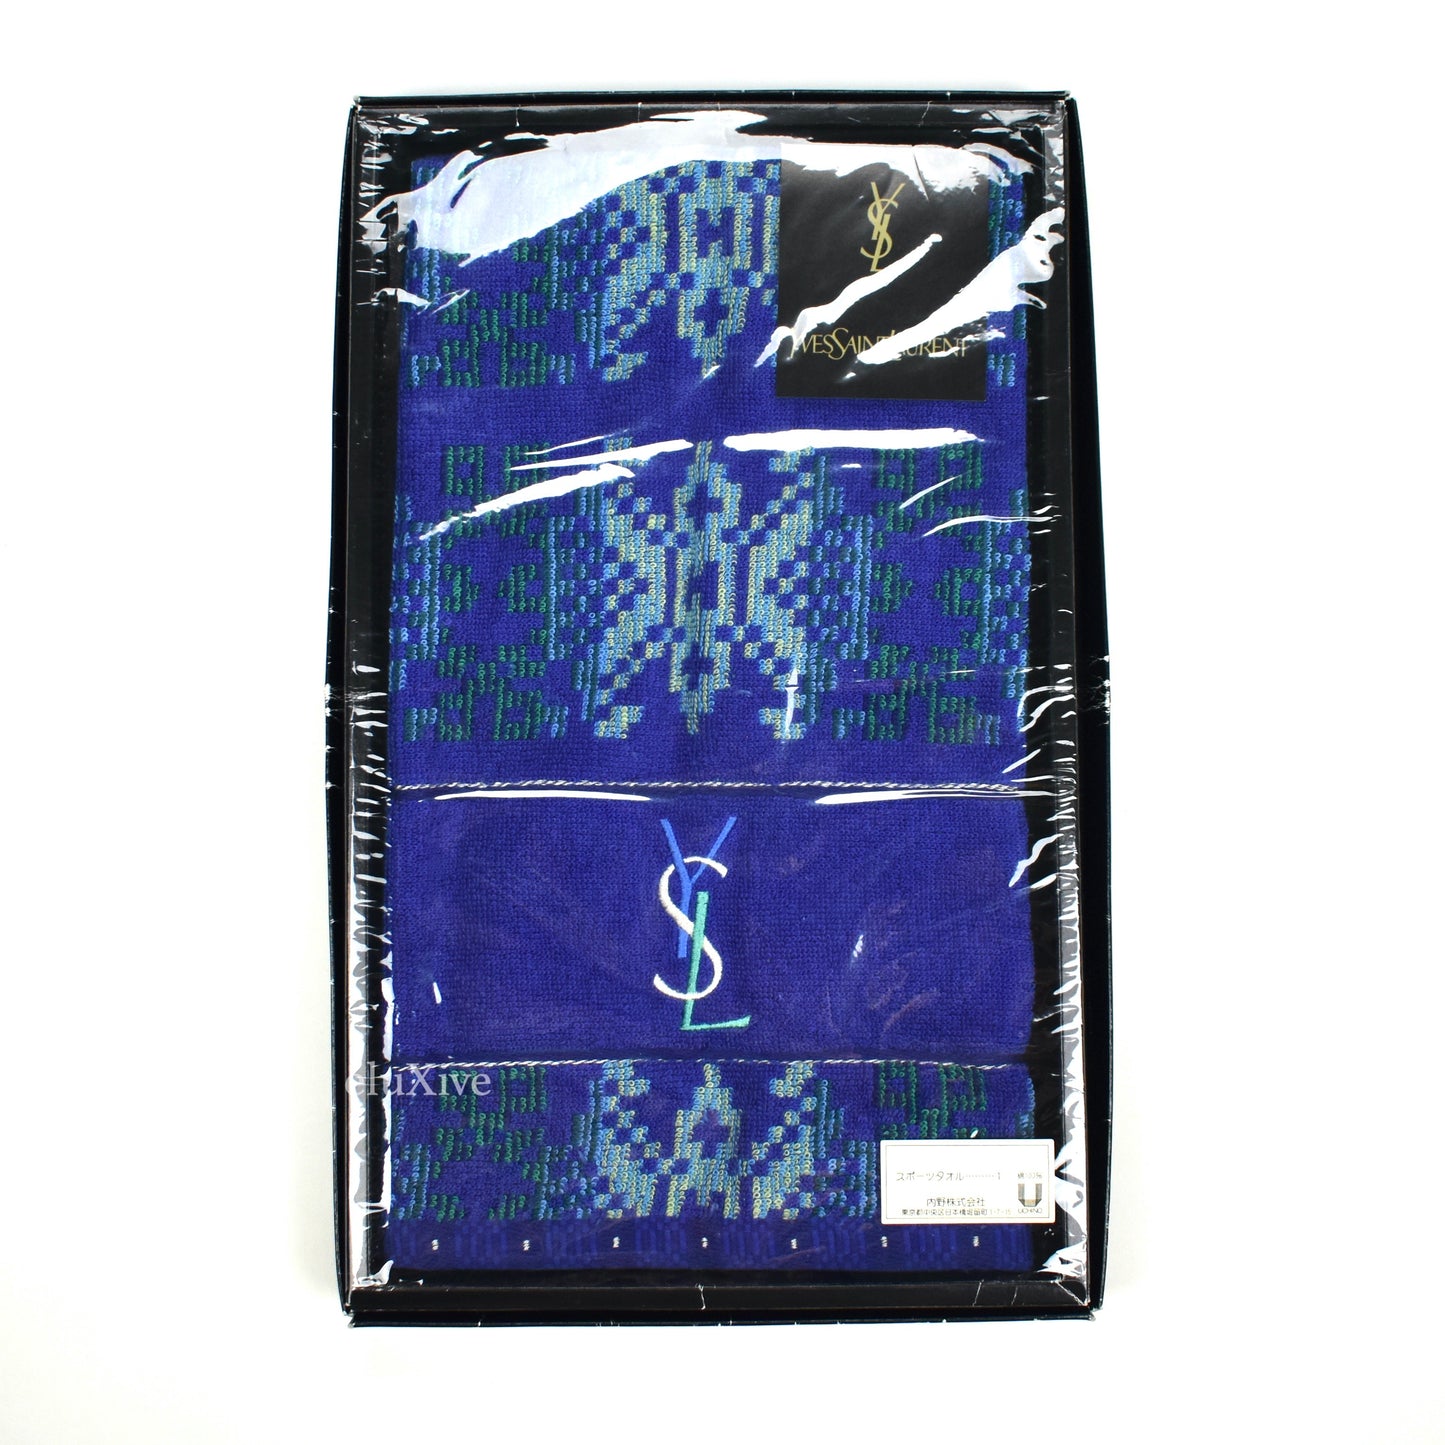 Yves Saint Laurent - Blue Logo Hand Towel (Large)